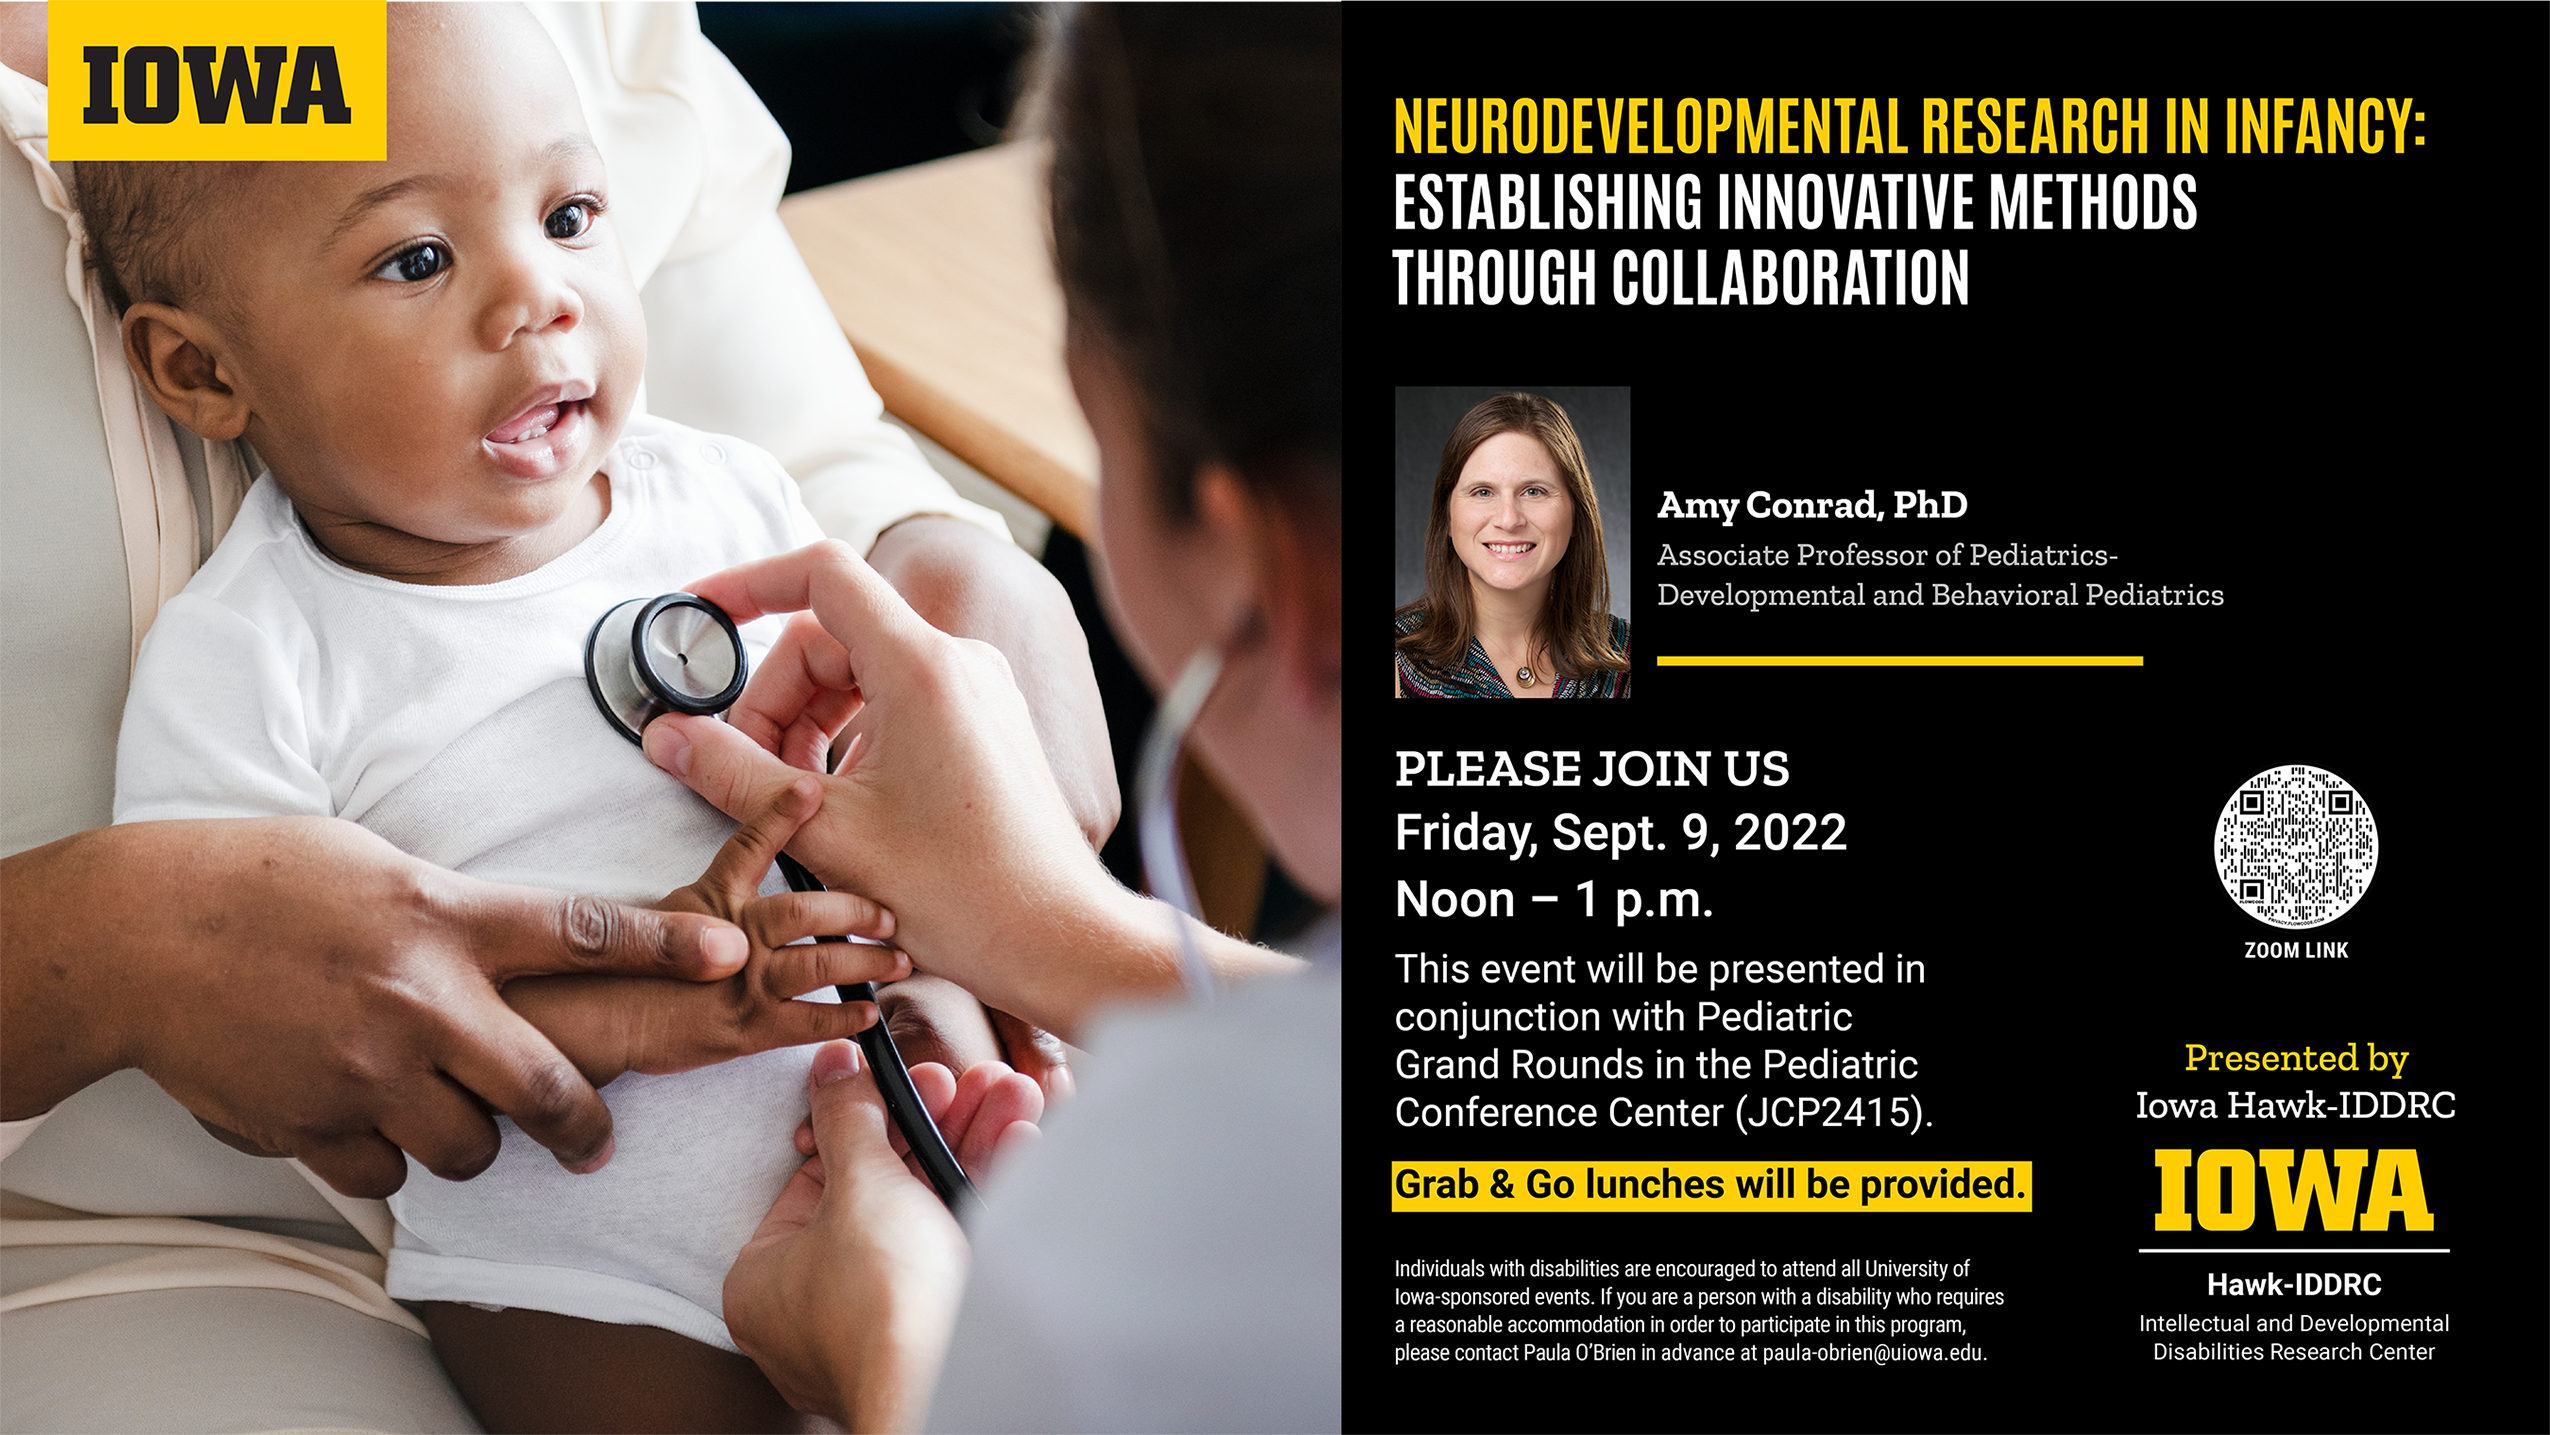 Hawk-IDDRC Seminar Series featuring Amy Conrad, PhD presenting: “Neurodevelopmental Research in Infancy: Establishing Innovative Methods through Collaboration” promotional image